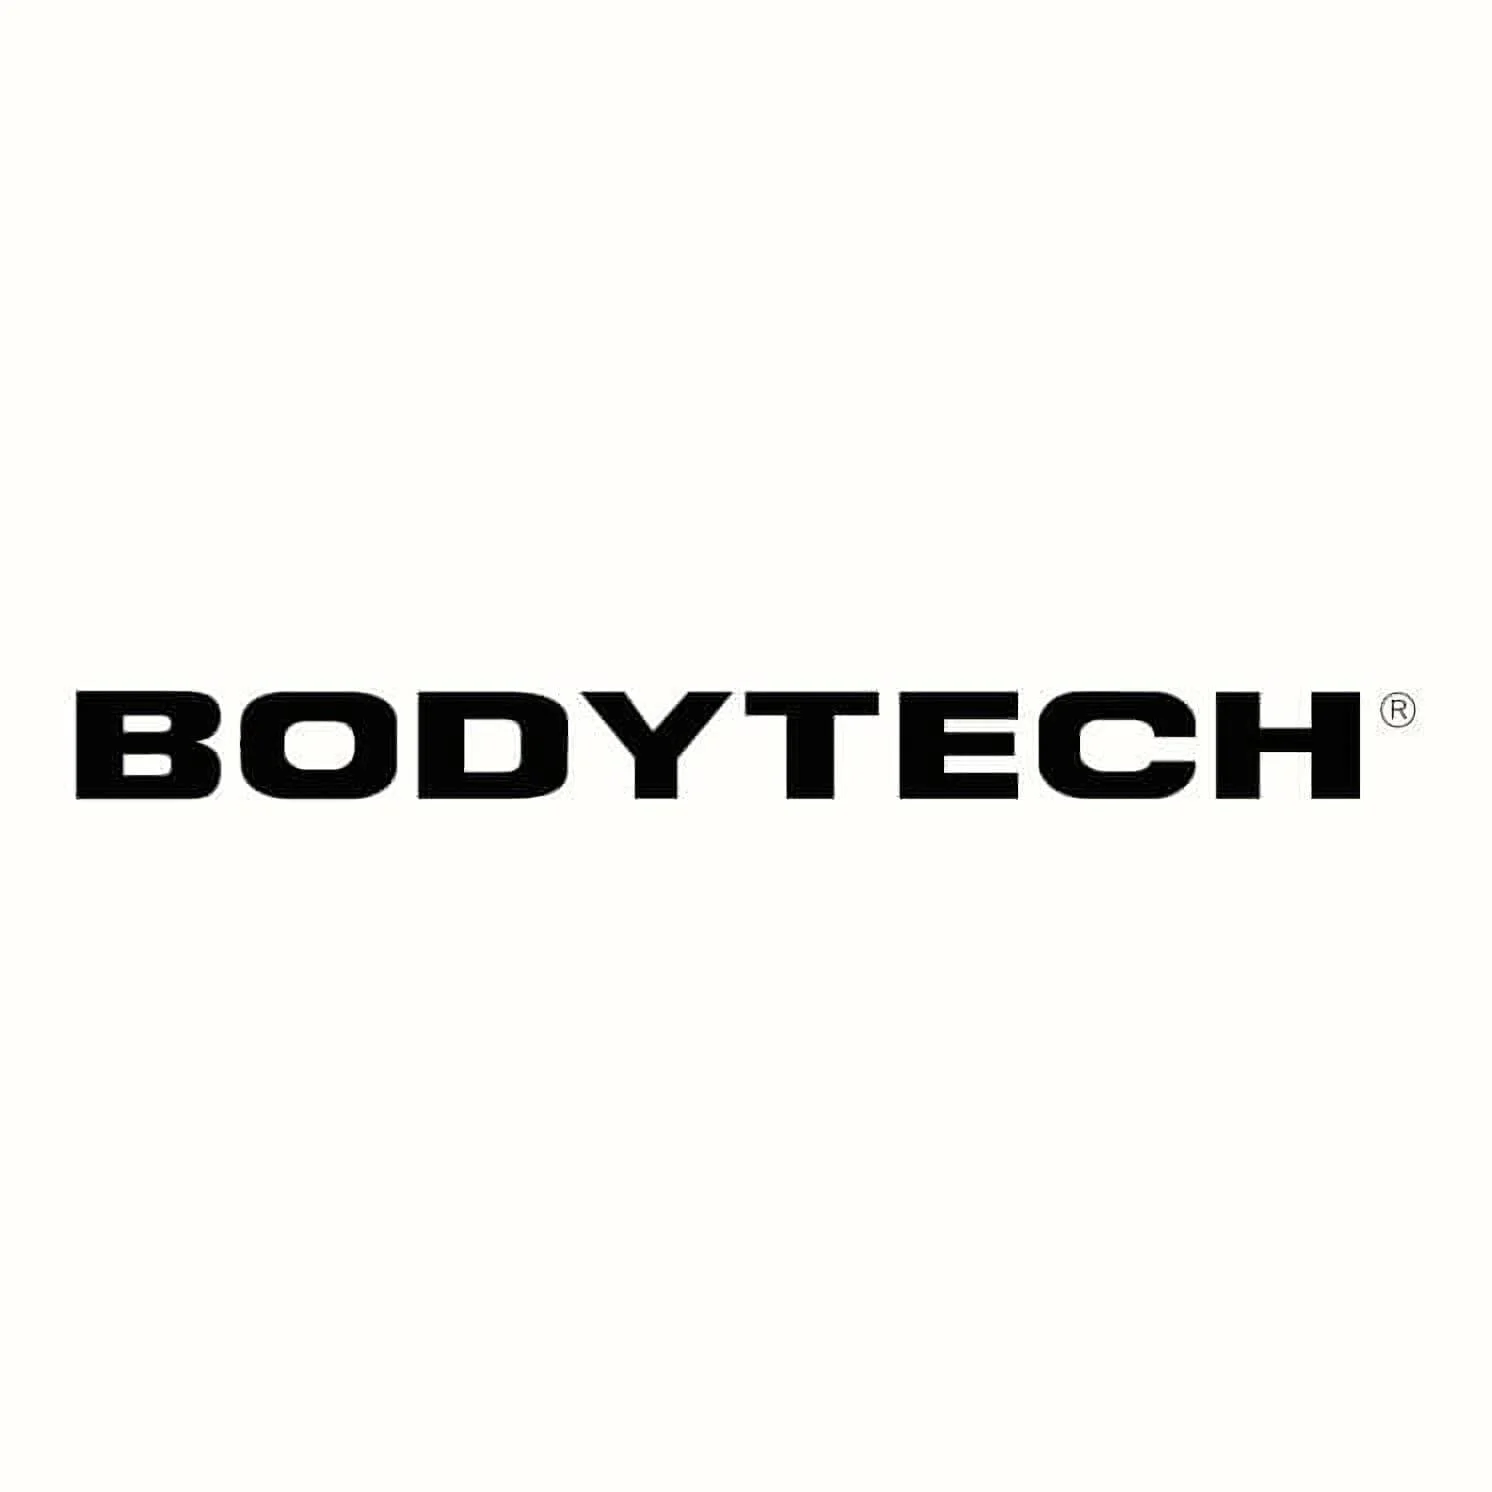 Bodytech — Caribe Plaza-742